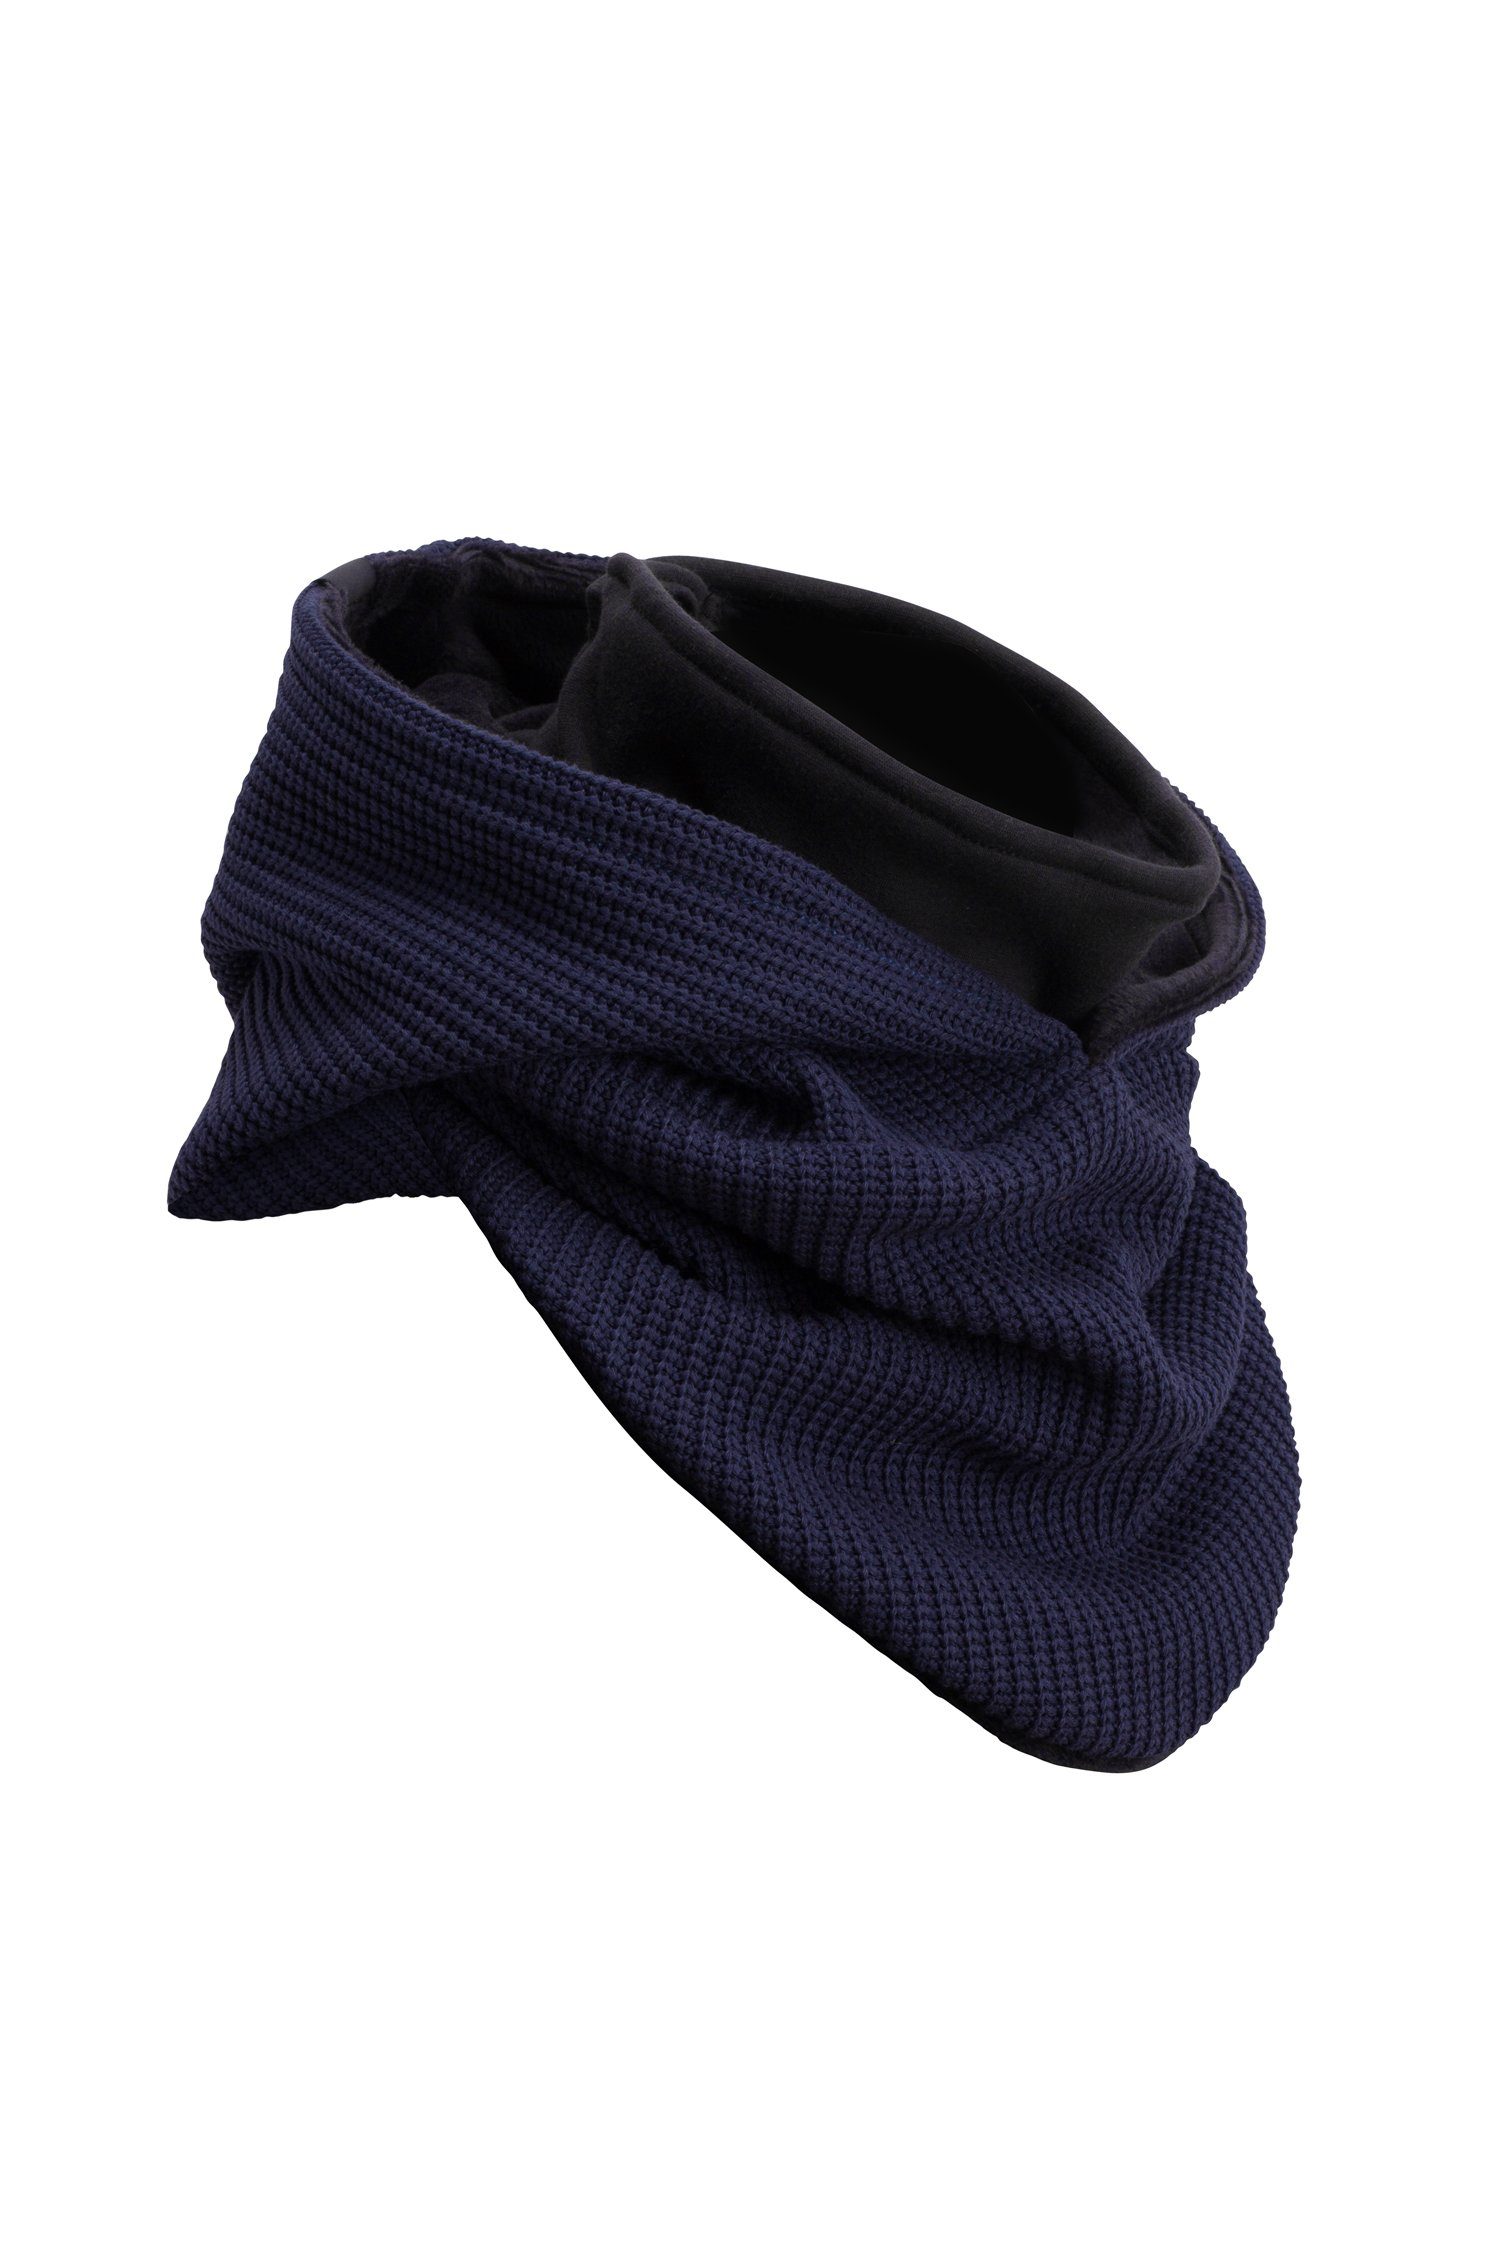 Manufaktur13 Modeschal Knit Hooded Loop - Kapuzenschal, Schal, Strickschal, mit integriertem Windbreaker Navy